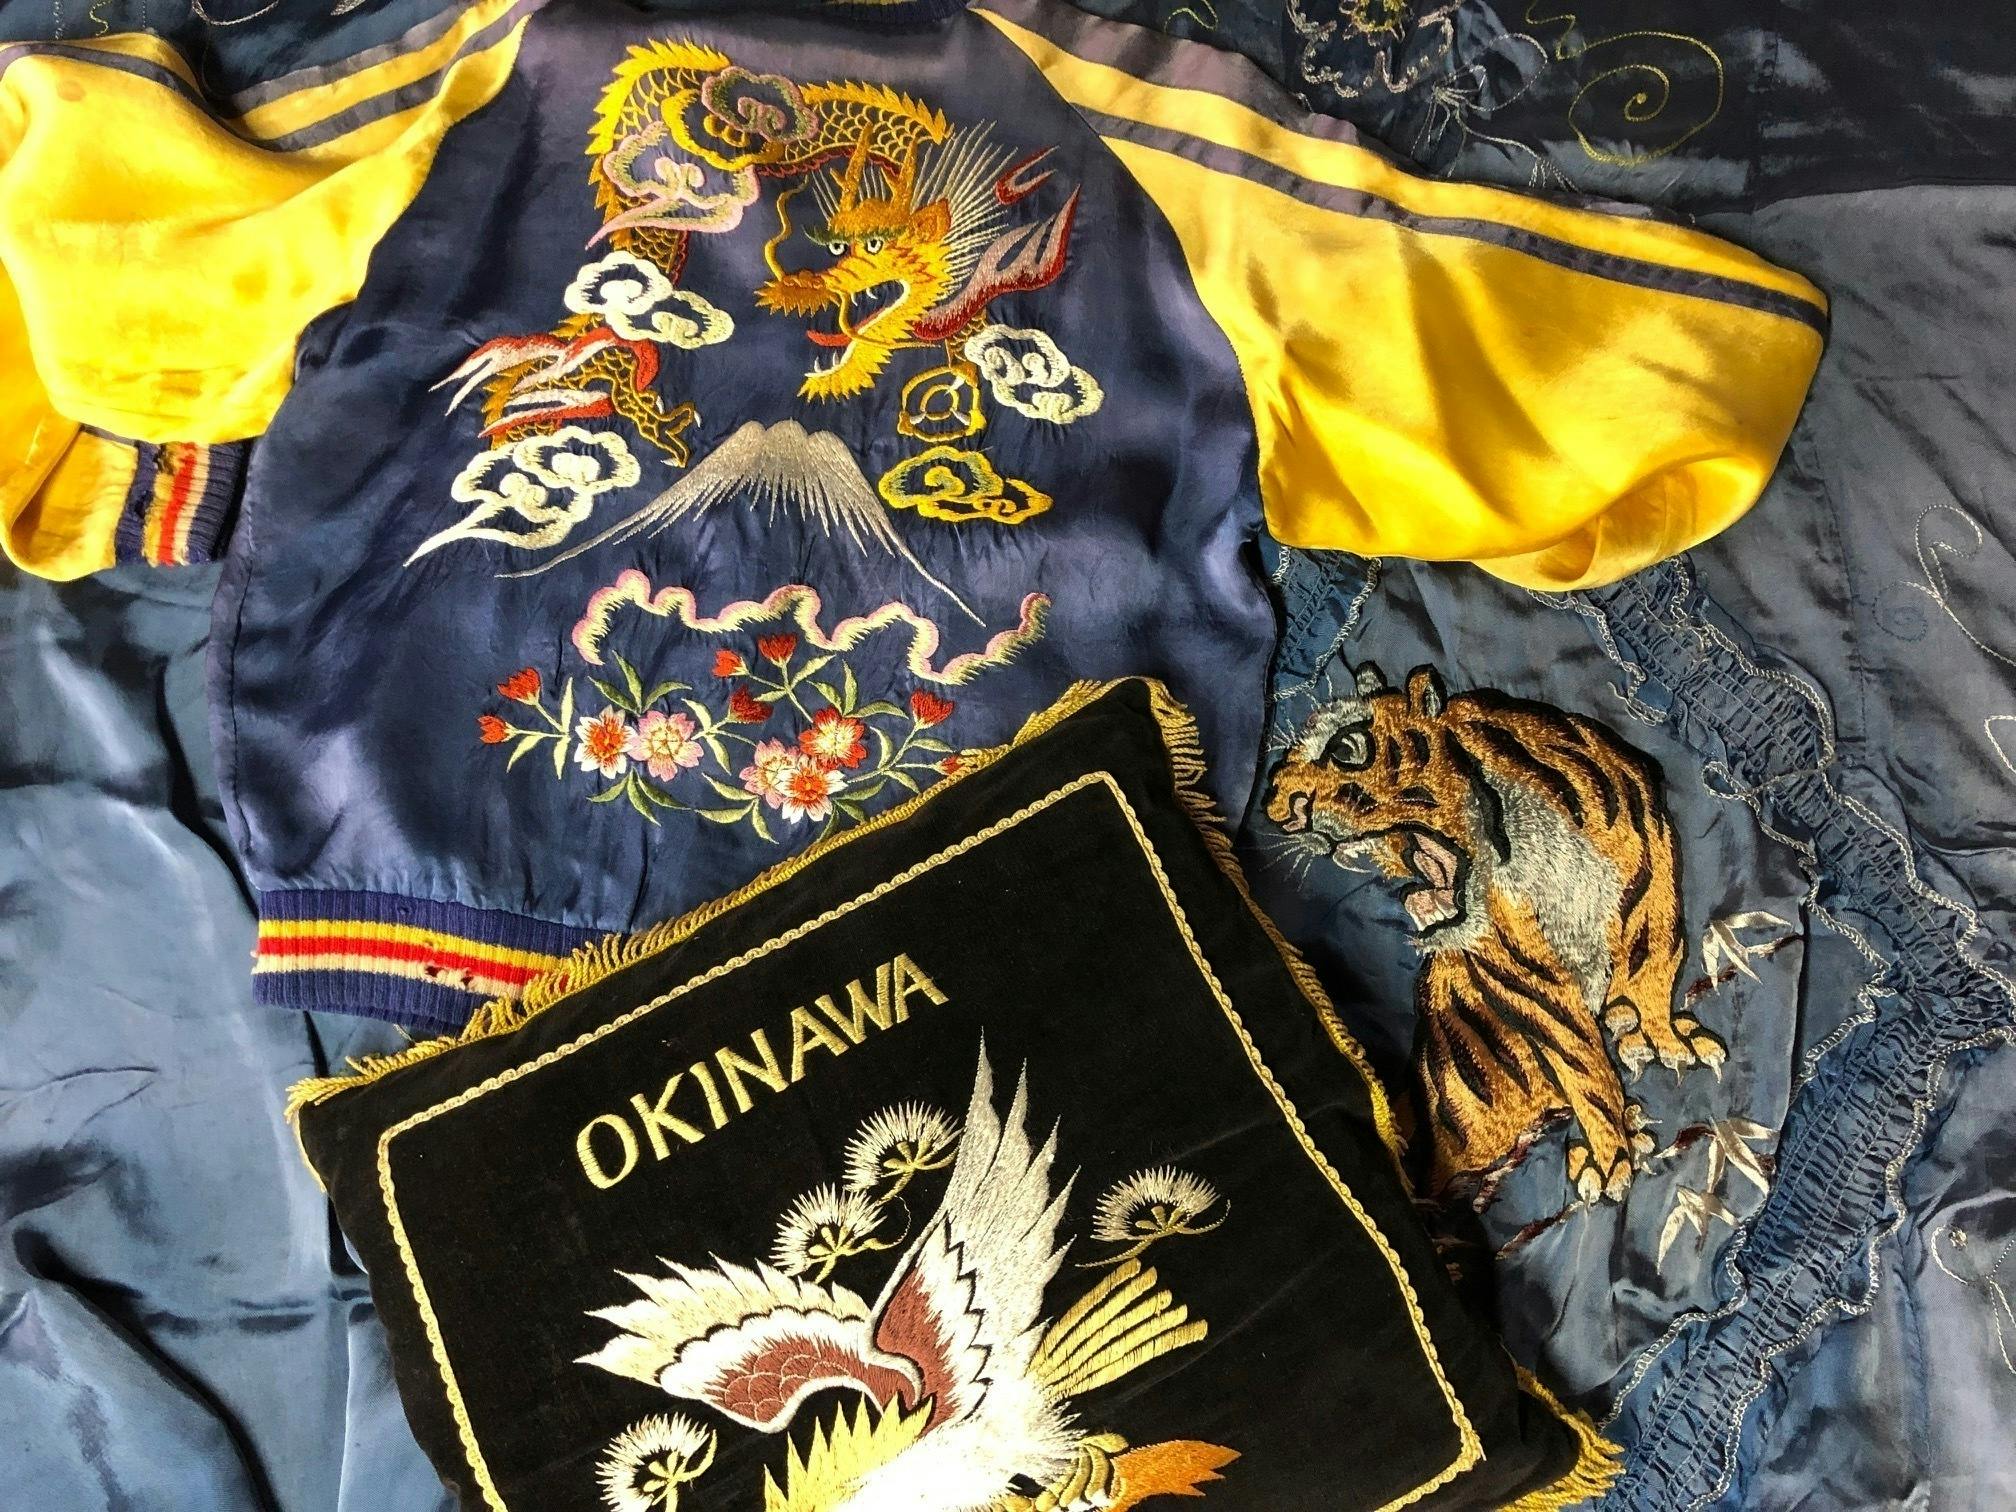 kozaburo スーベニアジャケット コウザブロウ スカジャン - スカジャン